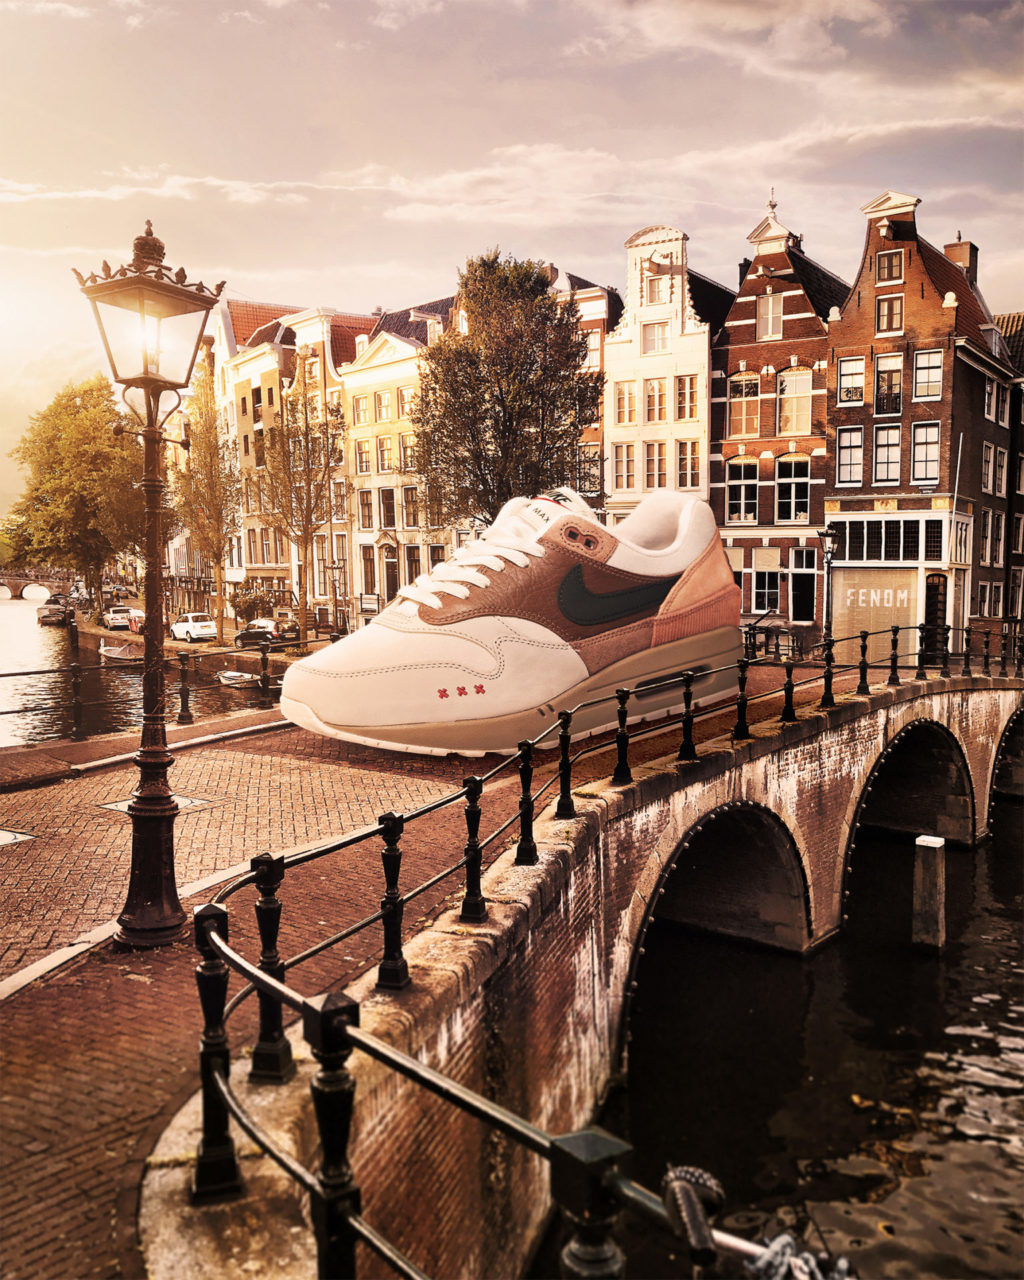 Nike Air Max 1 City Pack “London & "Amsterdam”